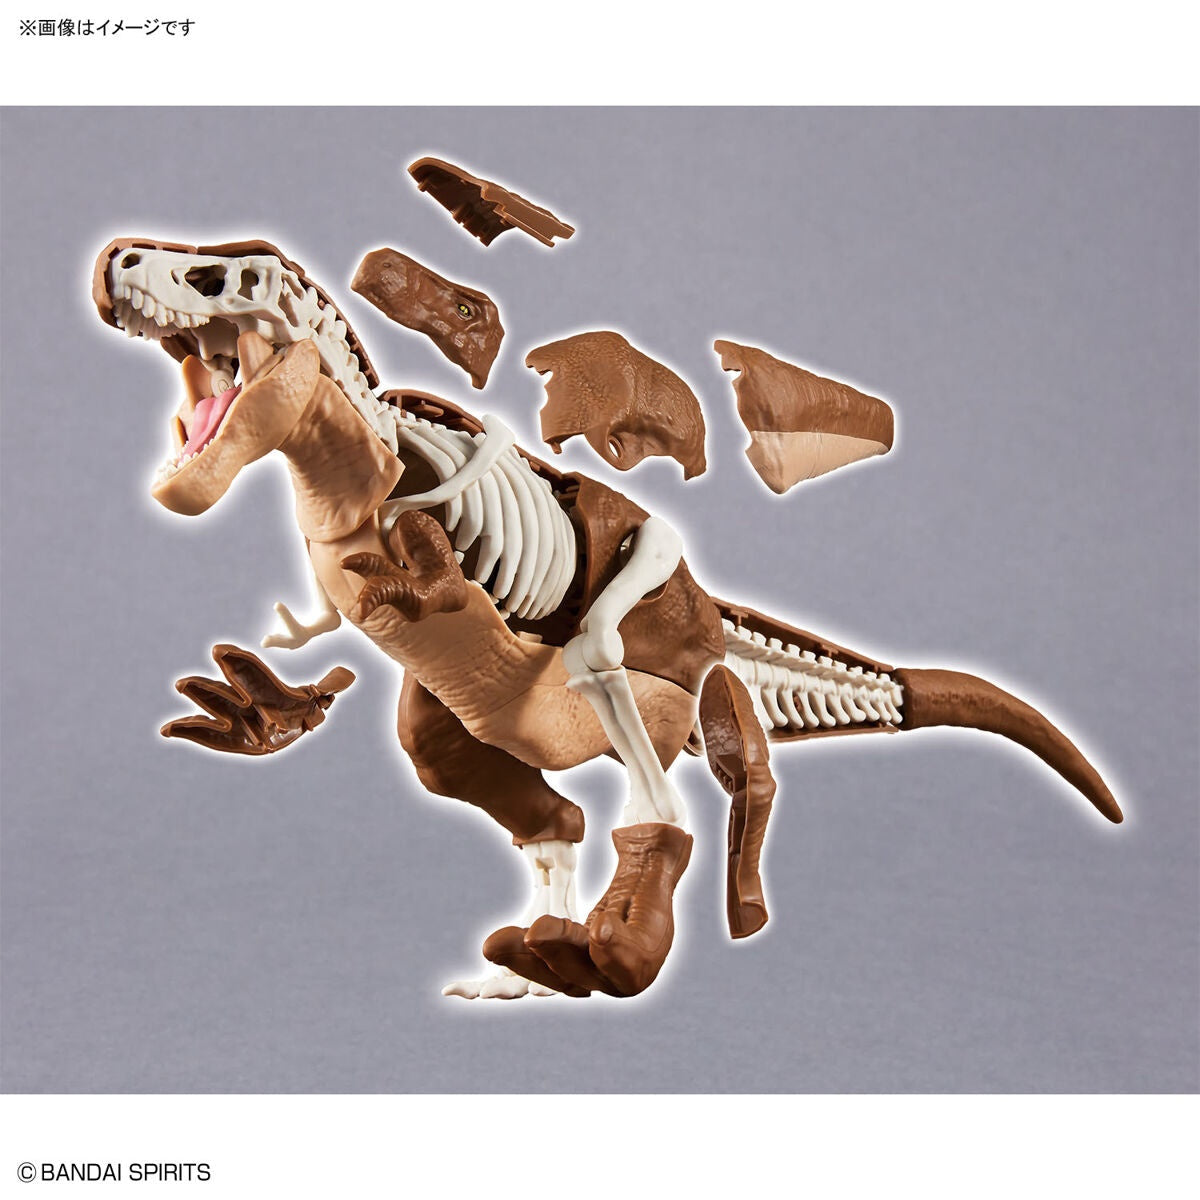 New Dinosaur Plastic Model Kit Brand &quot;Tyrannosaurus&quot;-Bandai-Ace Cards &amp; Collectibles